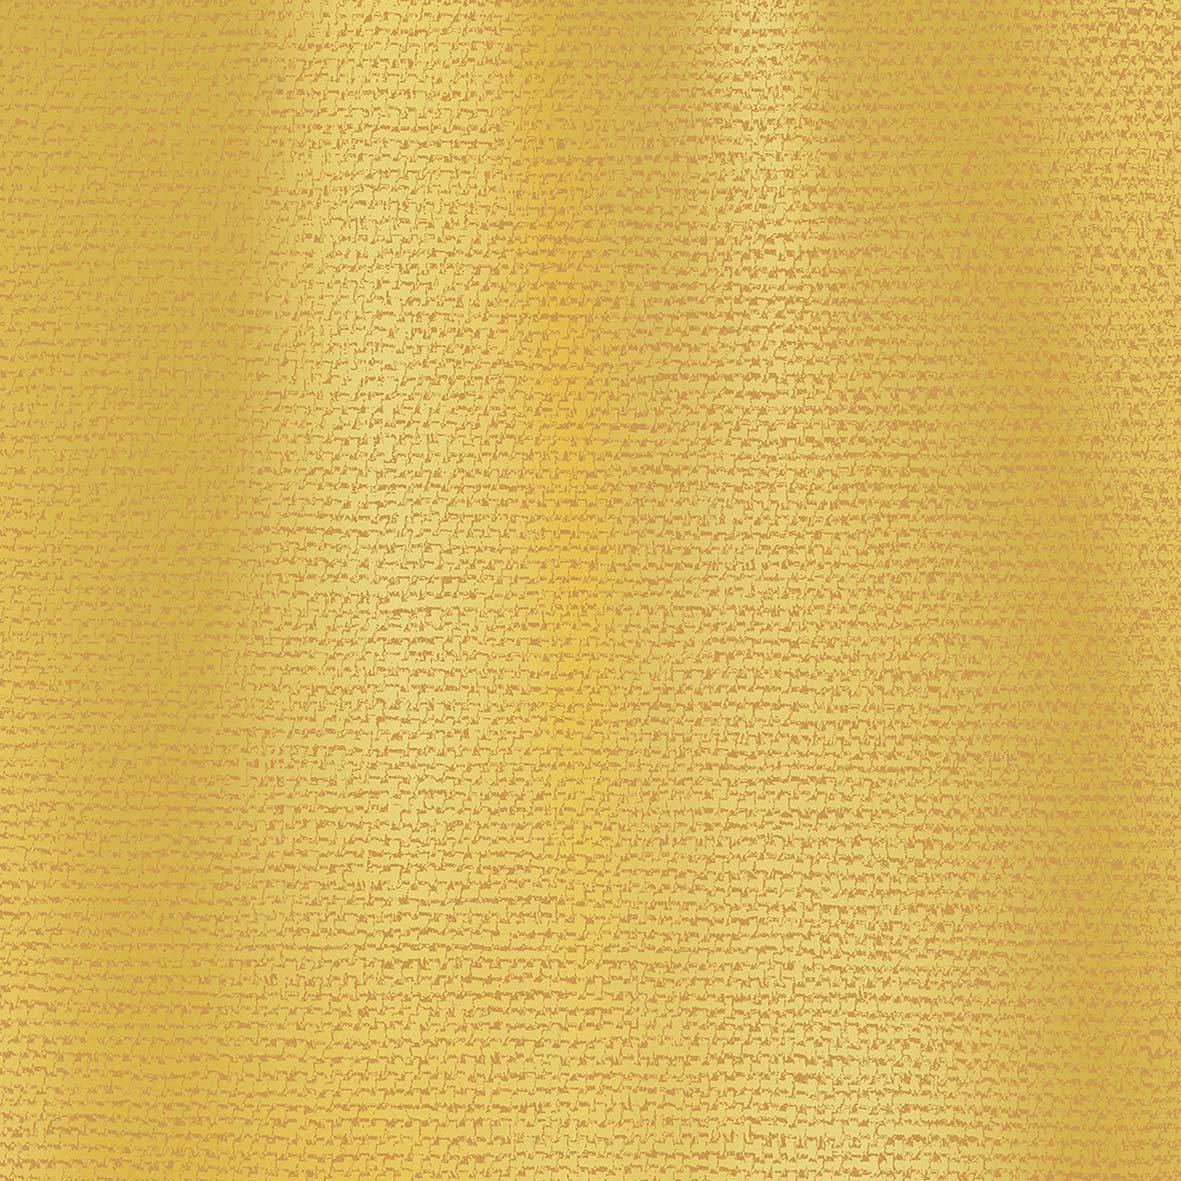 Canvas gold Napkin 33x33